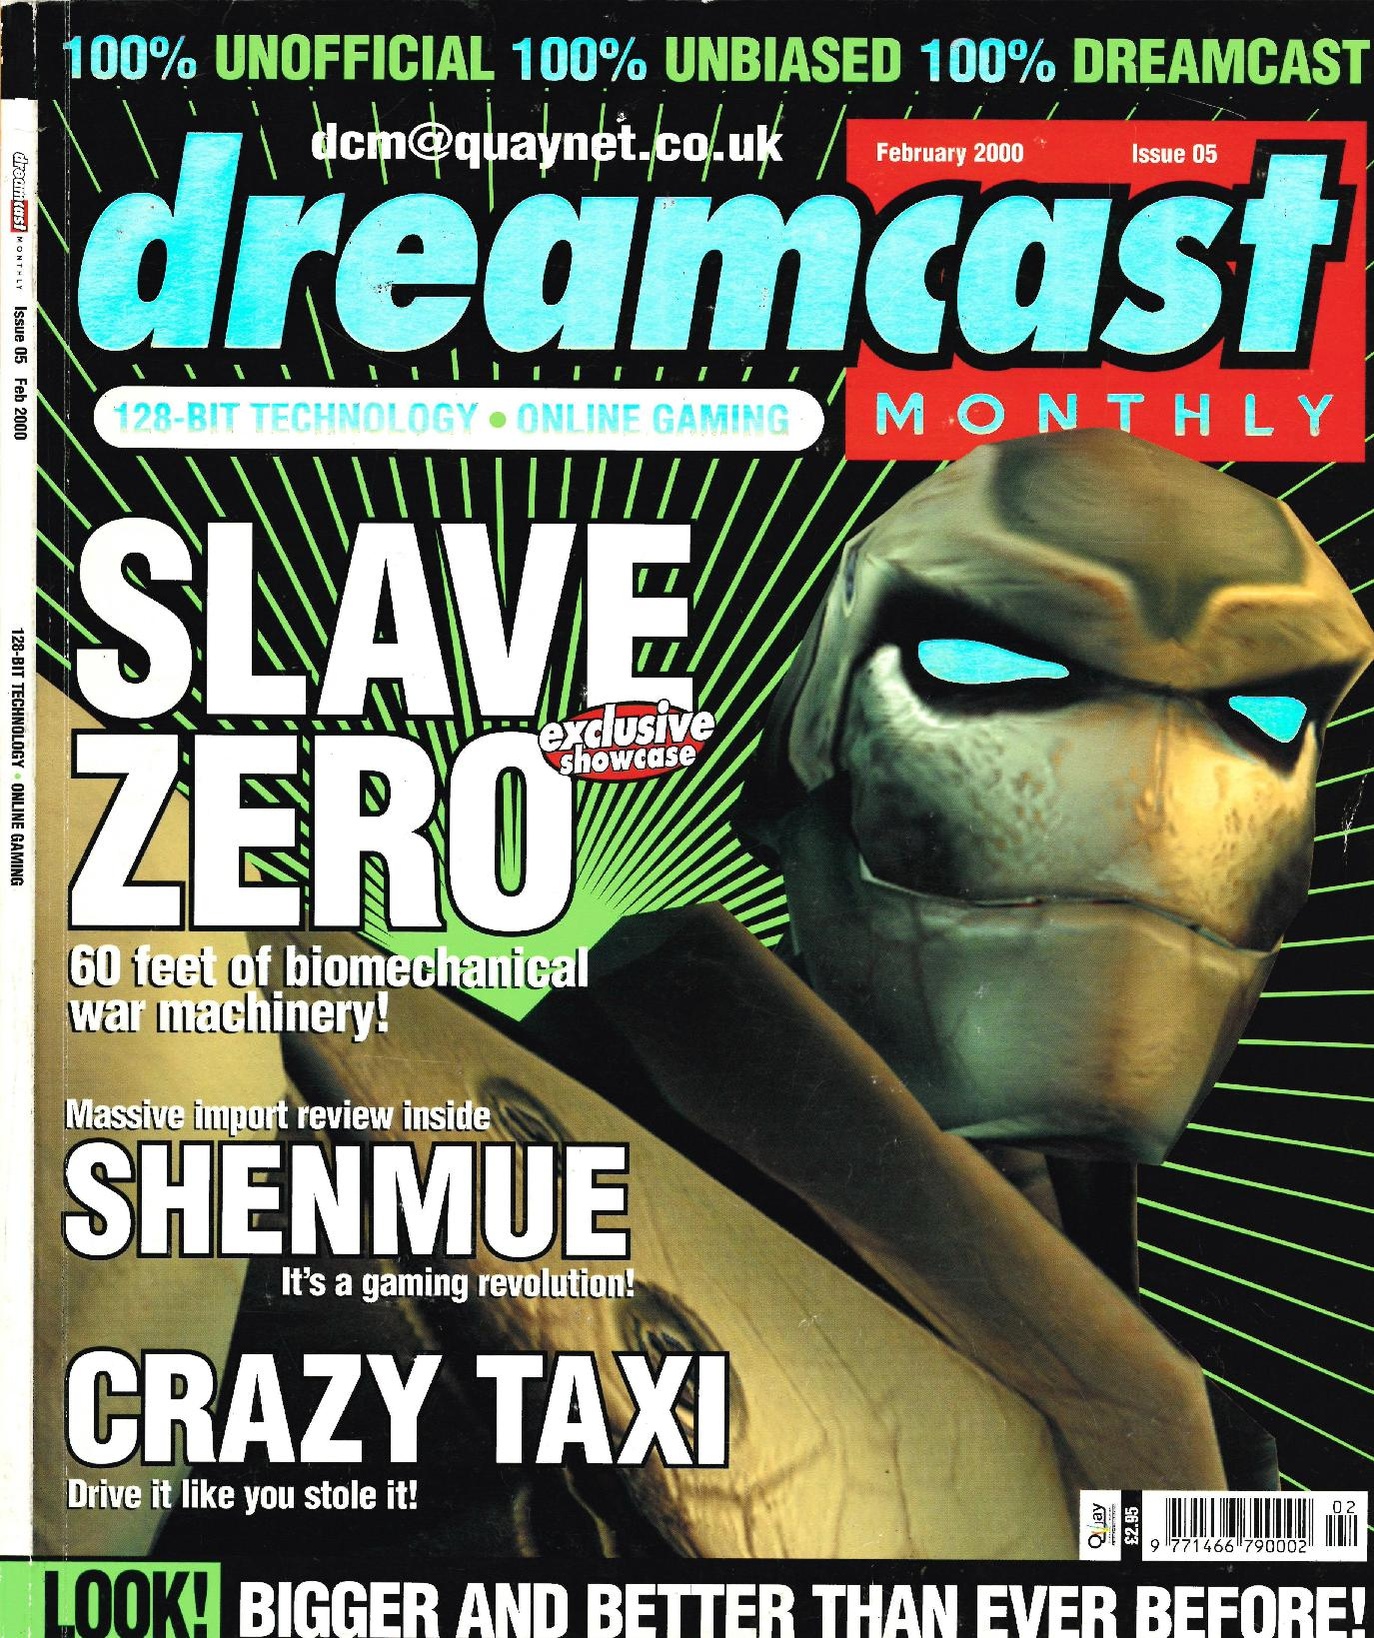 DreamcastMonthly UK 05.pdf